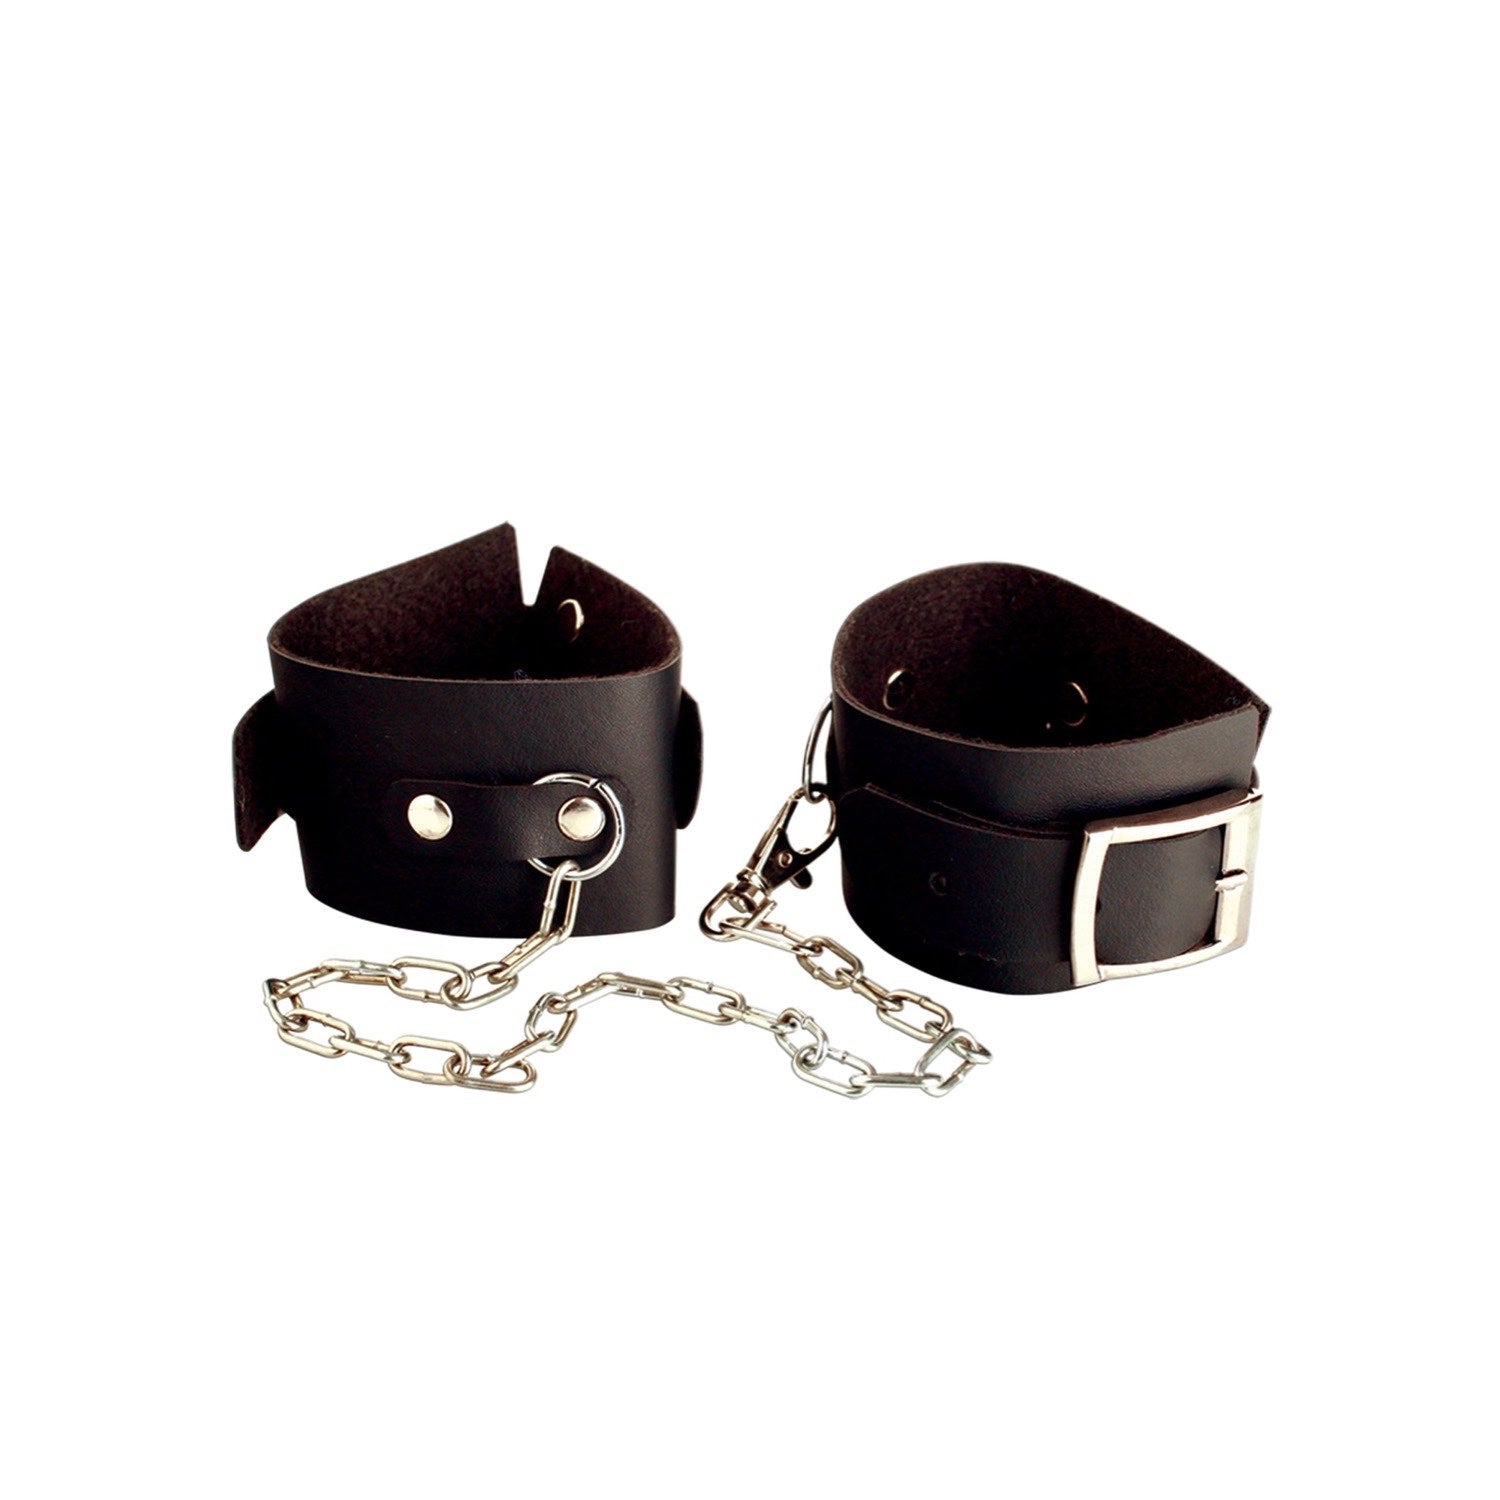  Beginner&#39;s Cuffs - Black Leather Cuffs by Pipedream